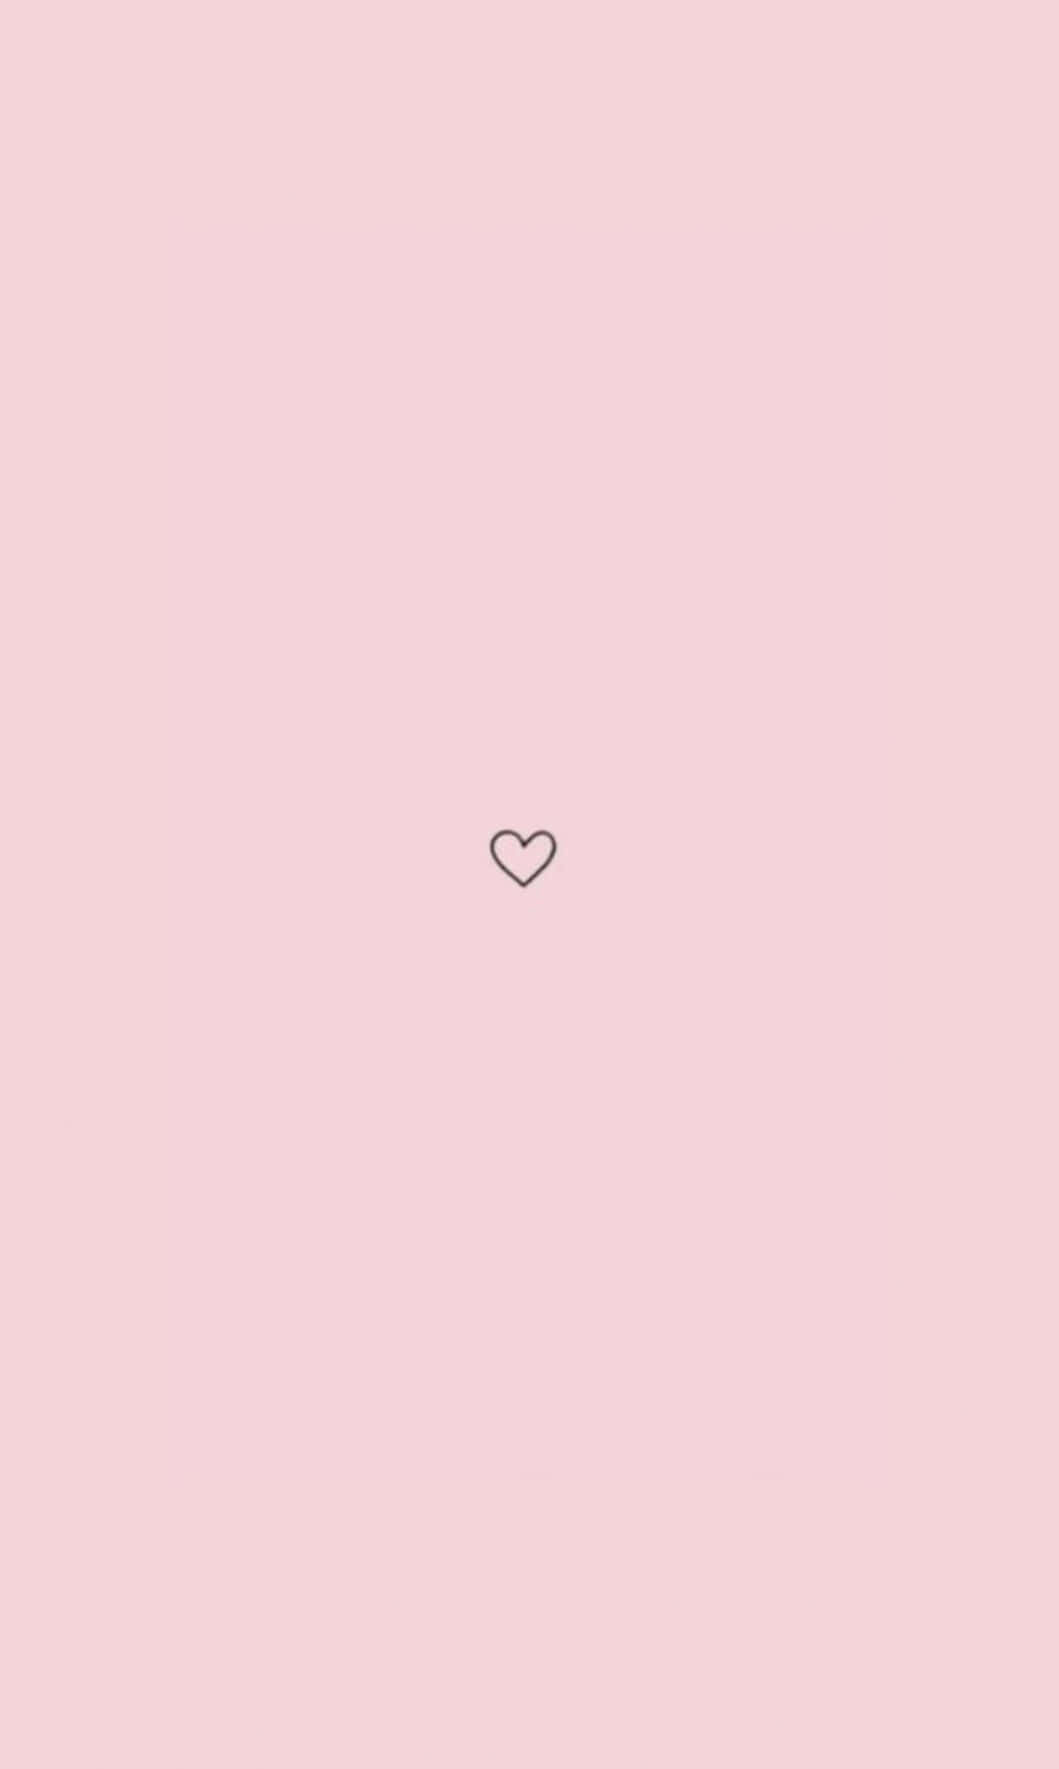 Tiny Heart On Blush Background